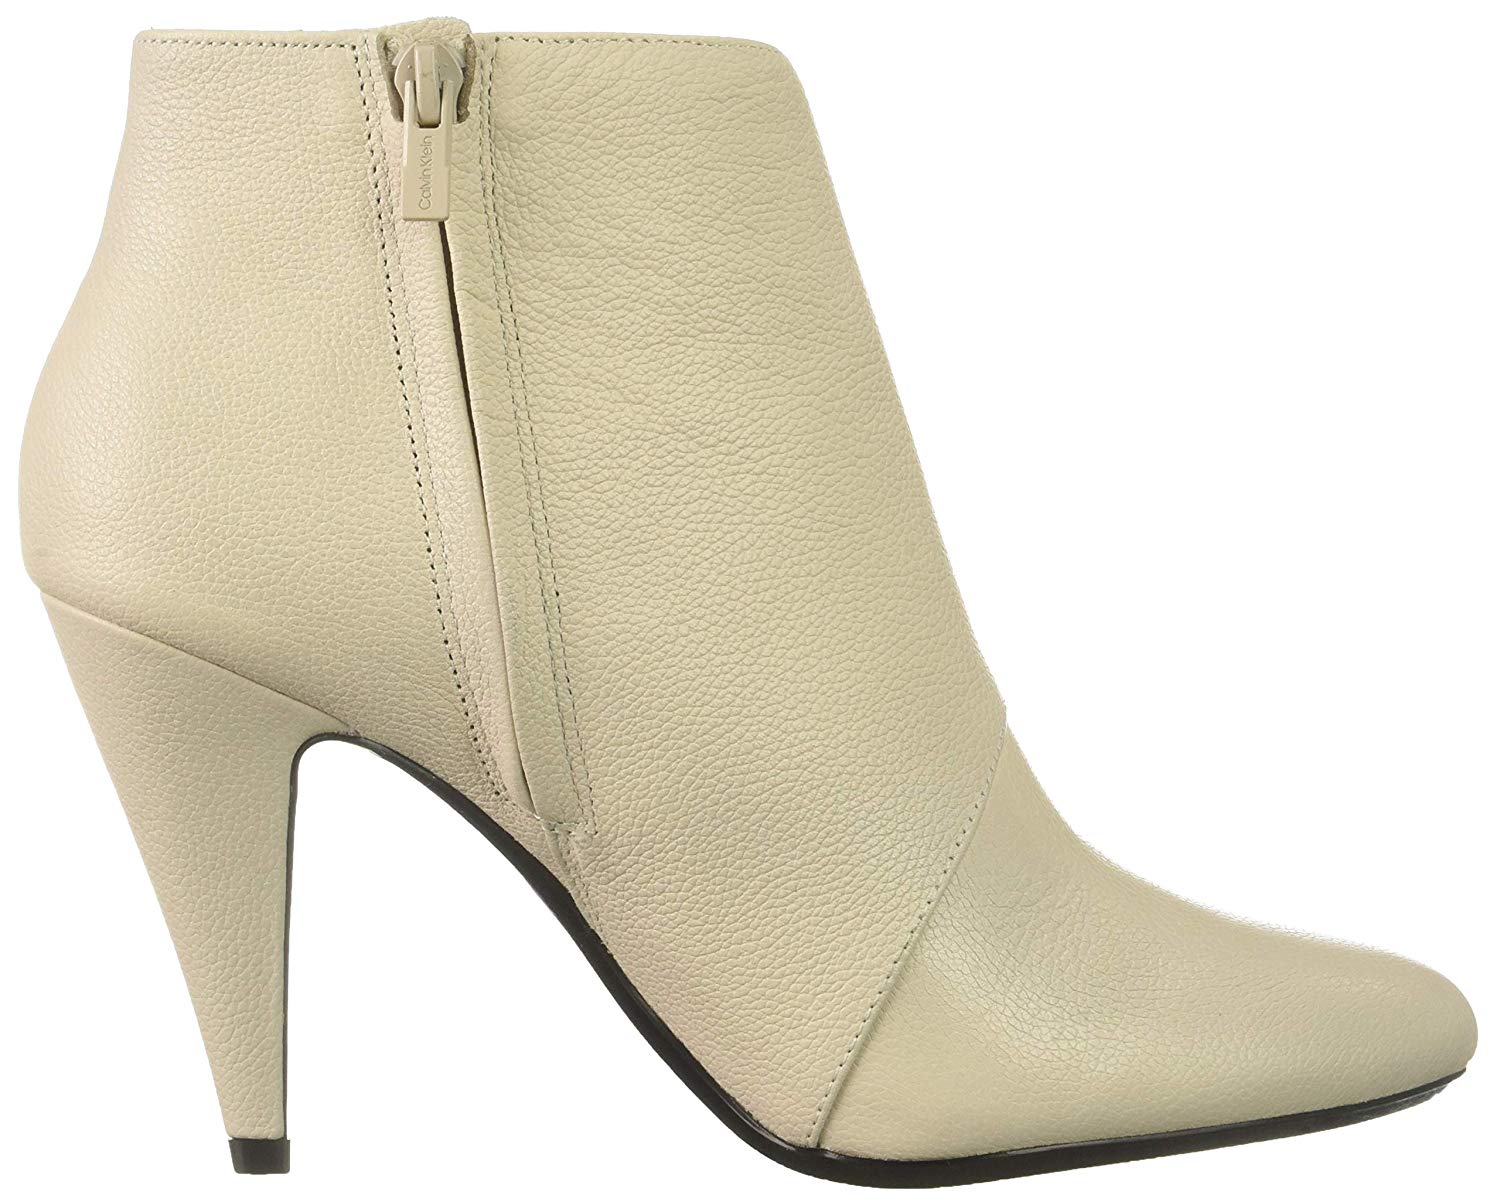 Calvin Klein Women's Nichol Ankle Boot, Soft White, Size 7.0 rFyP | eBay